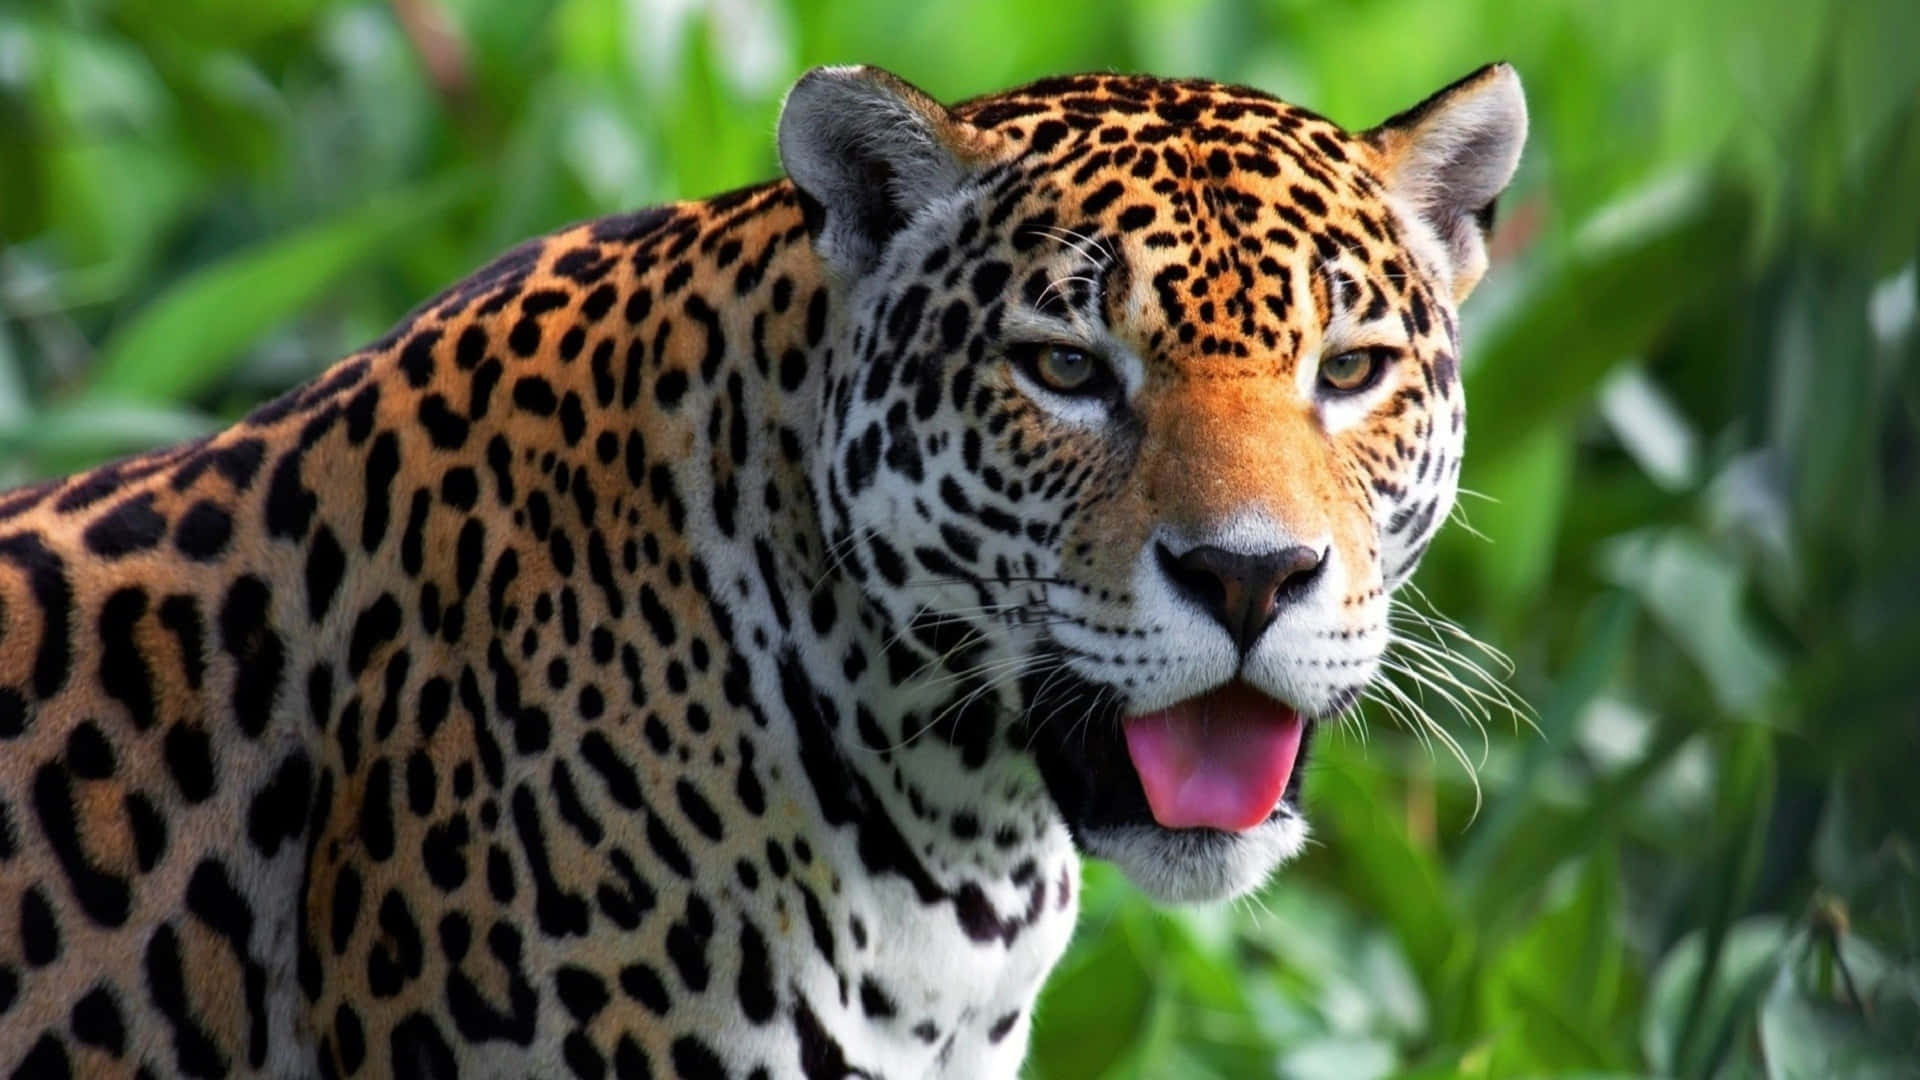 “The Power of the Jaguar”